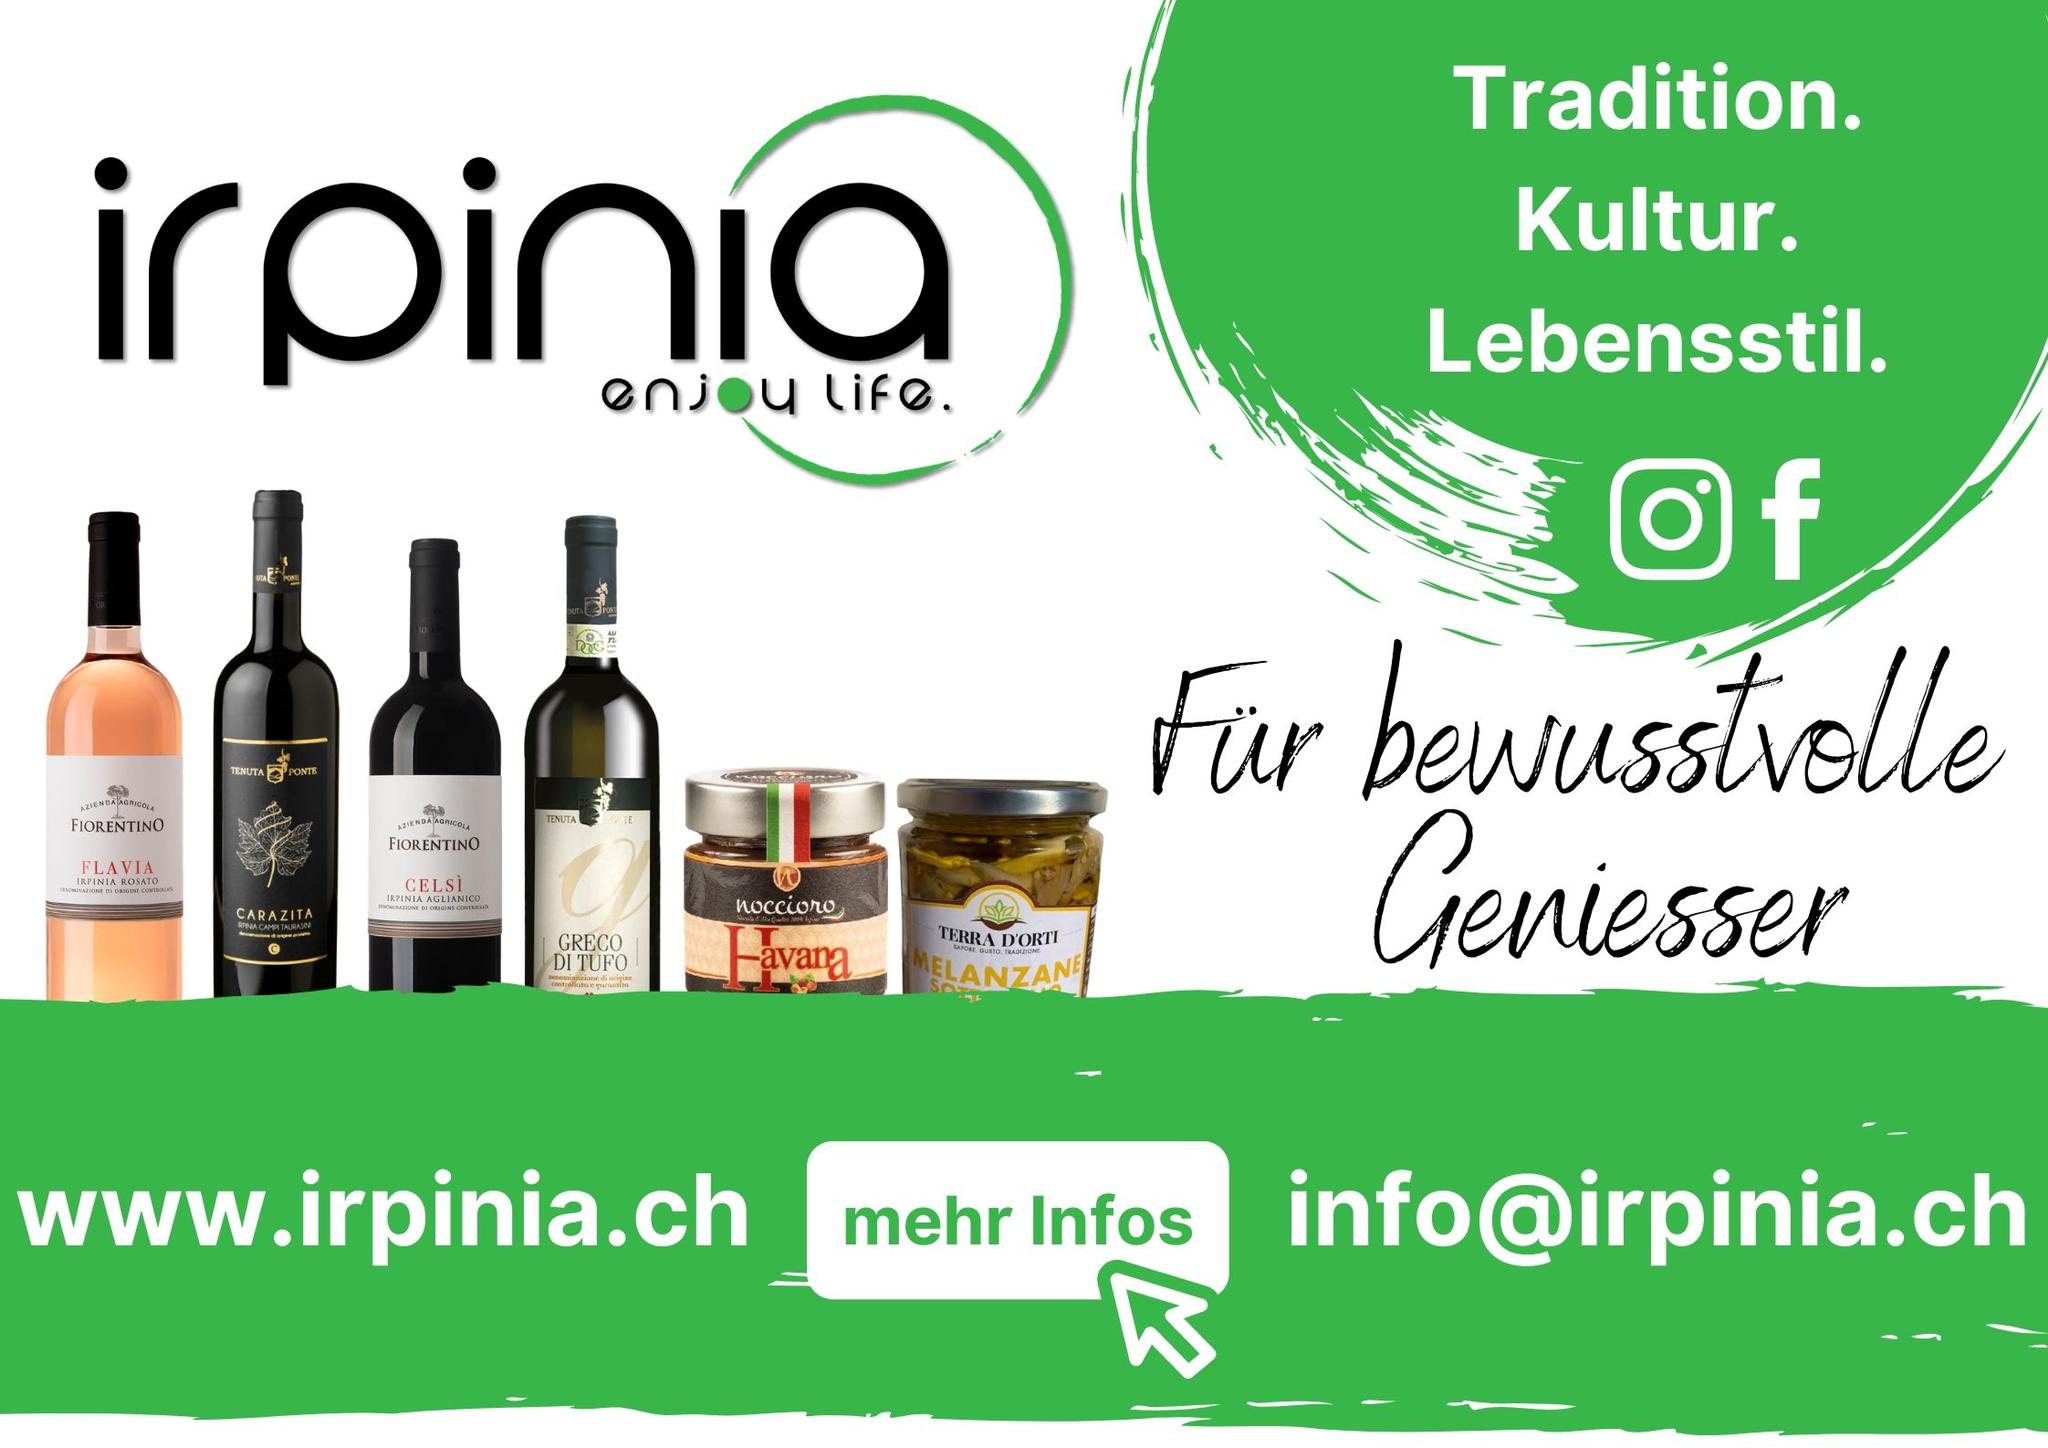 IRPINIA GmbH